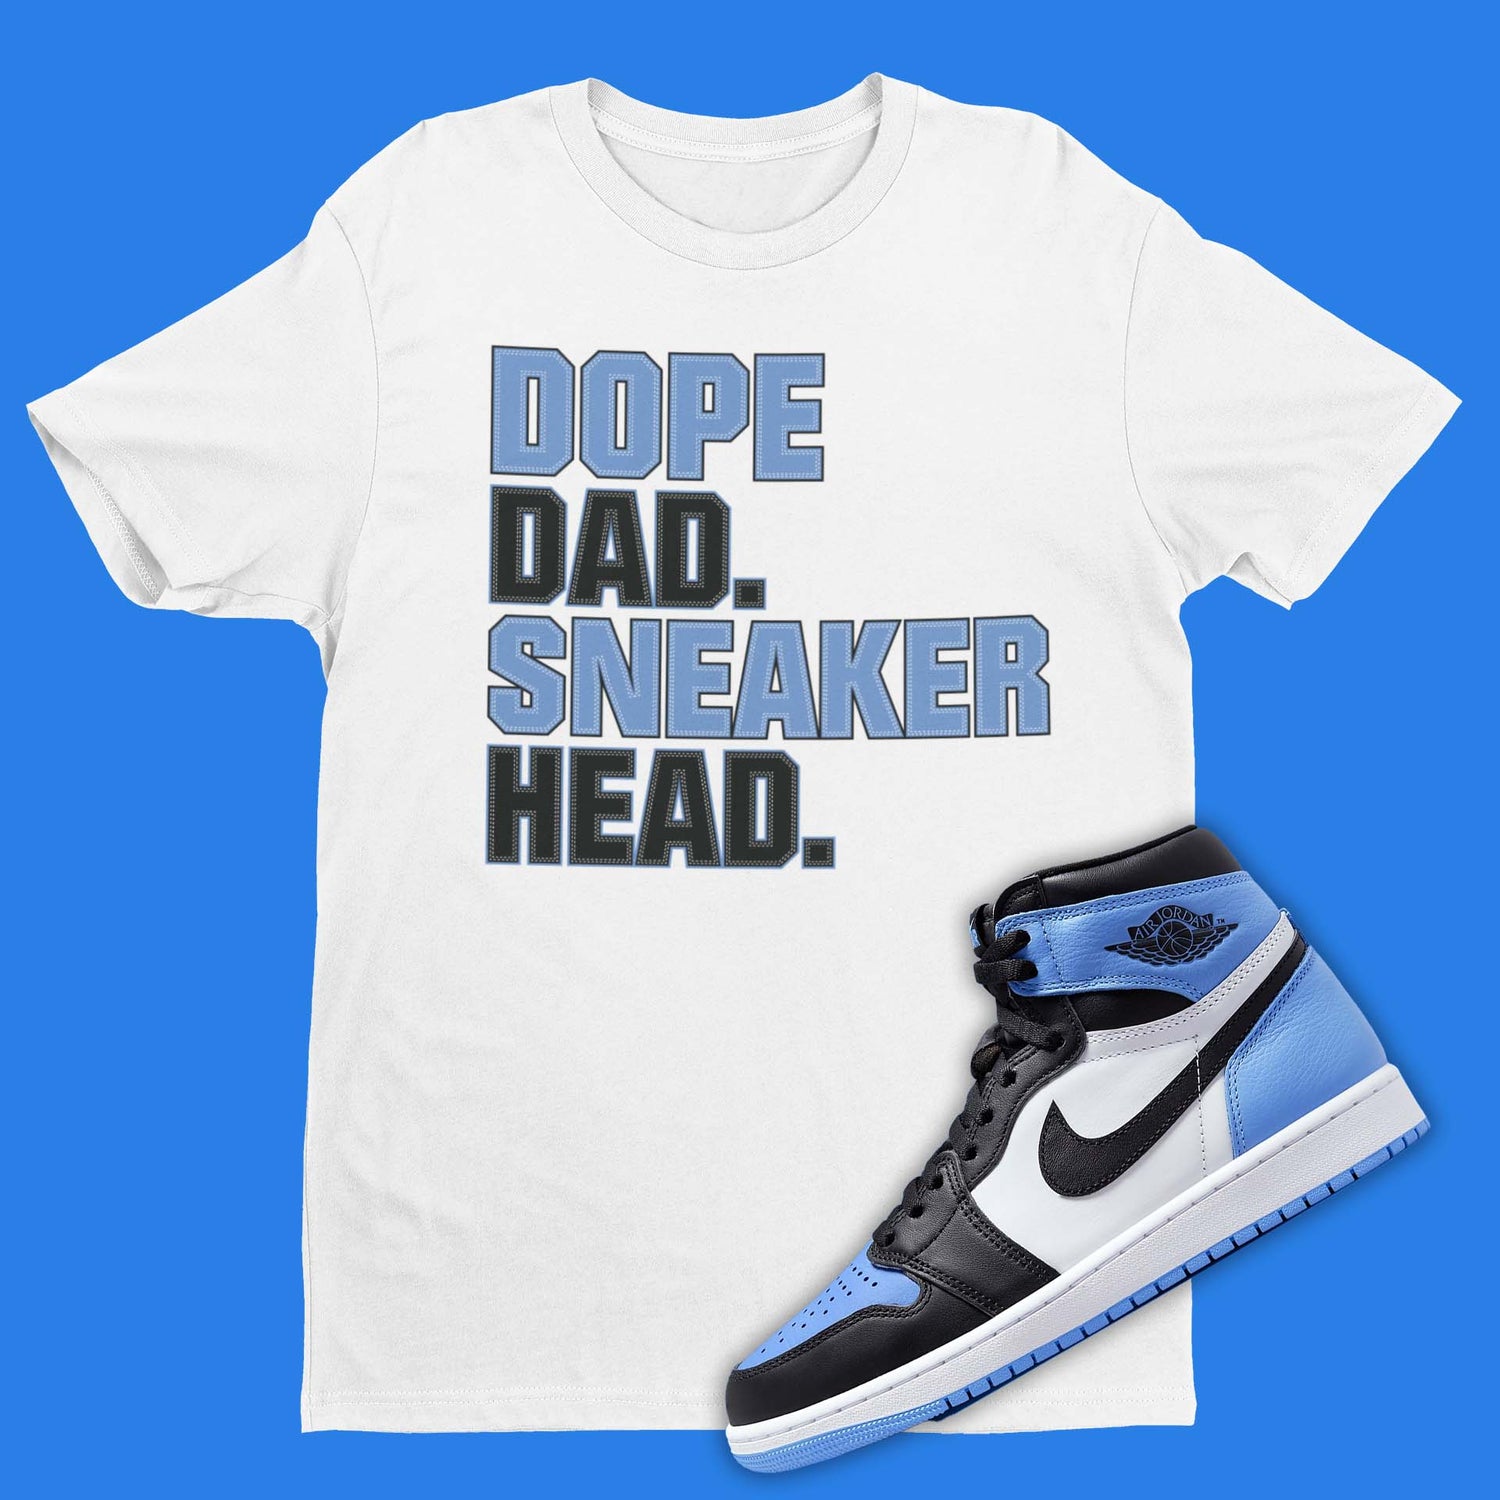 Dope Dad Sneakerhead Shirt to match Air Jordan 1 UNC Toe